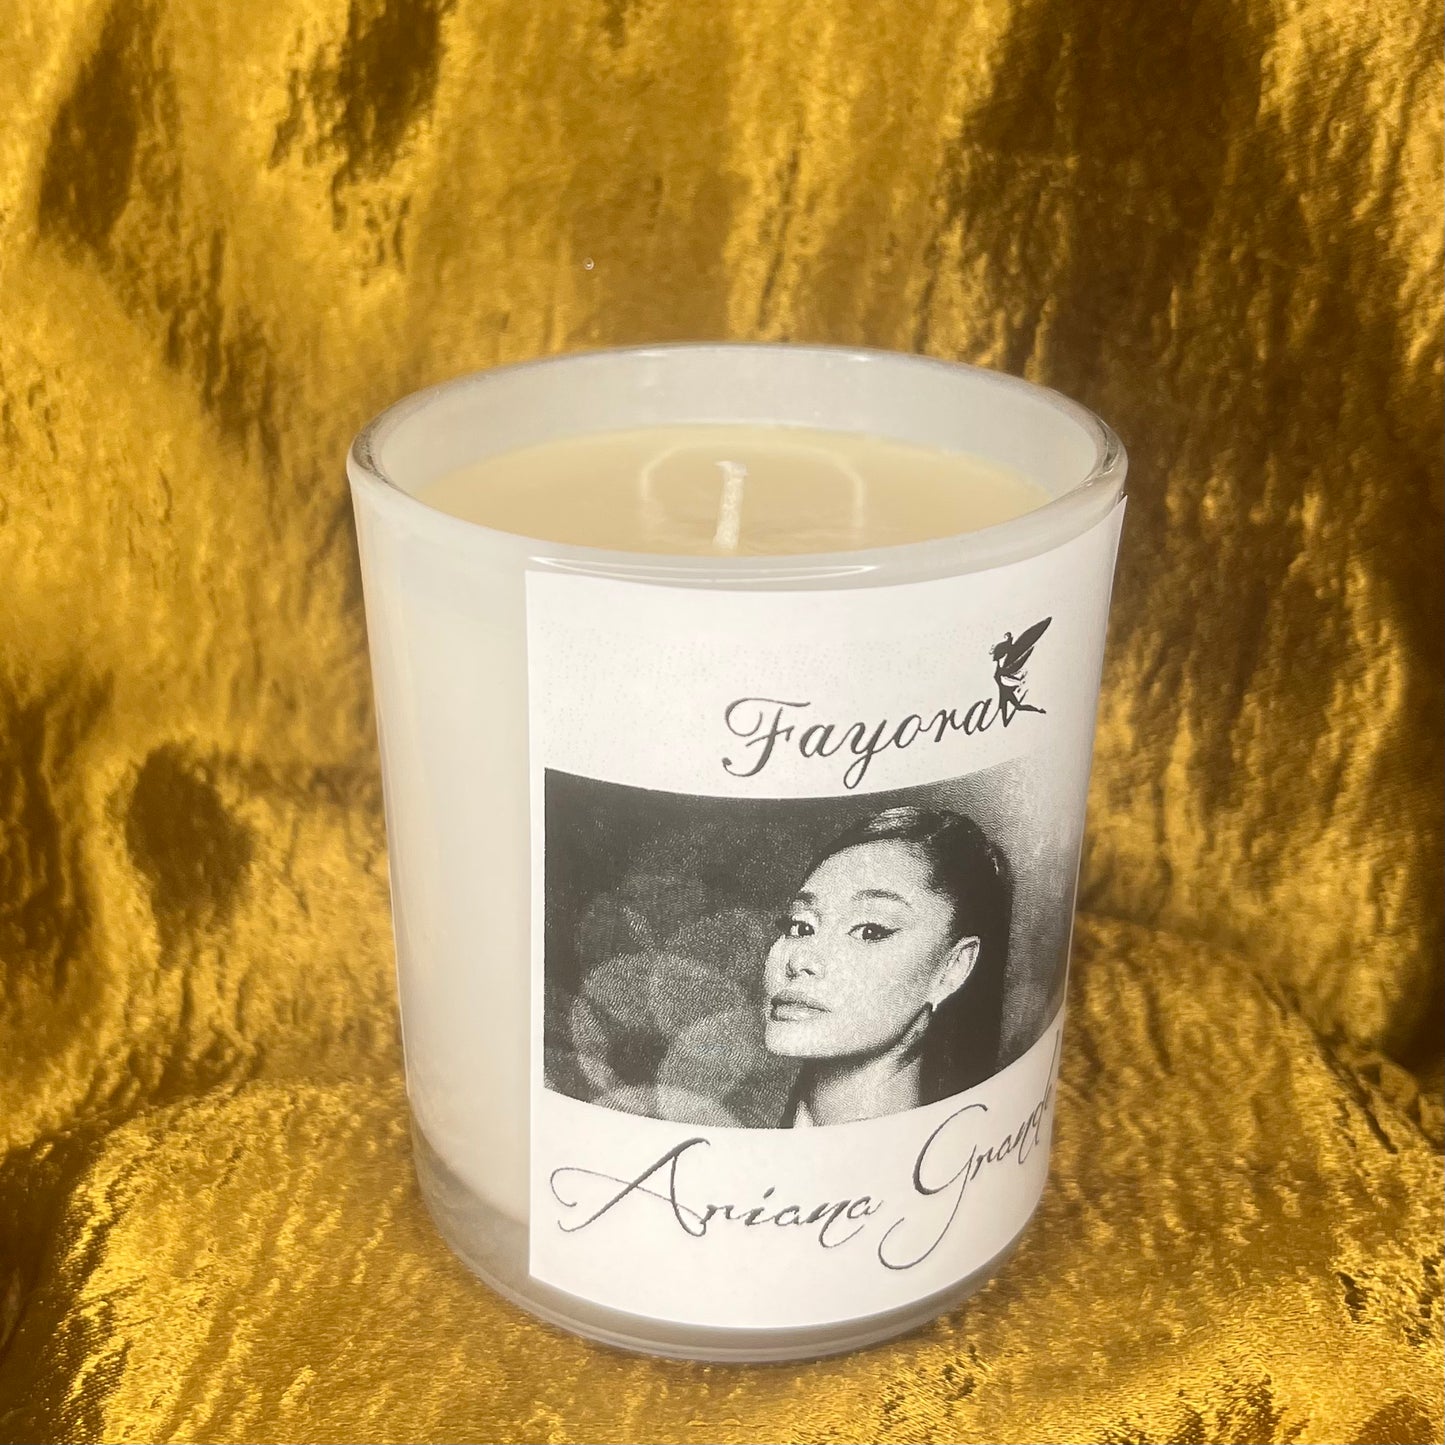 Ariana Grande Candle